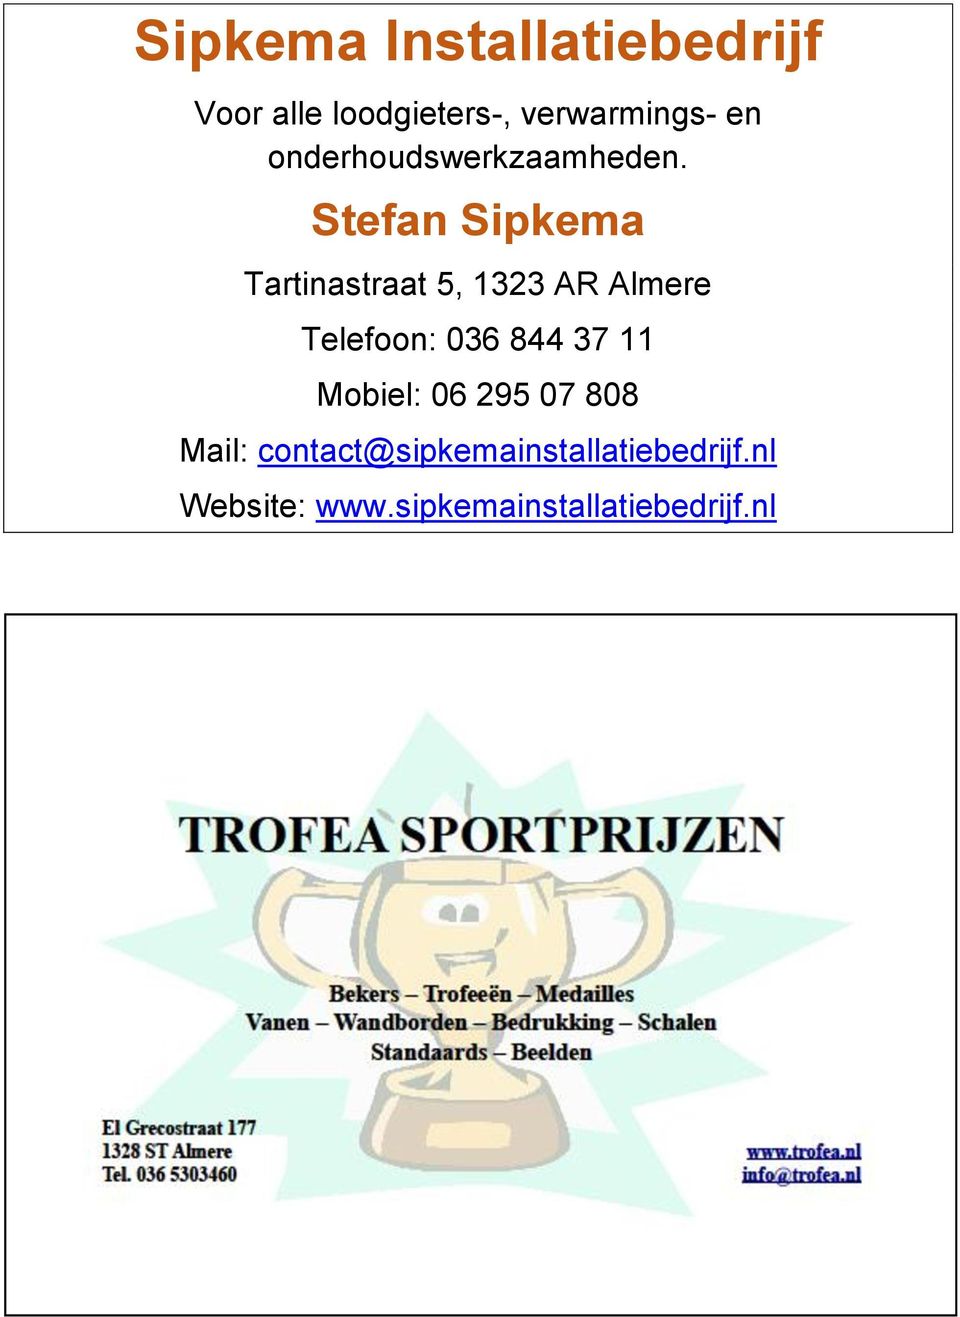 Stefan Sipkema Tartinastraat 5, 1323 AR Almere Telefoon: 036 844 37